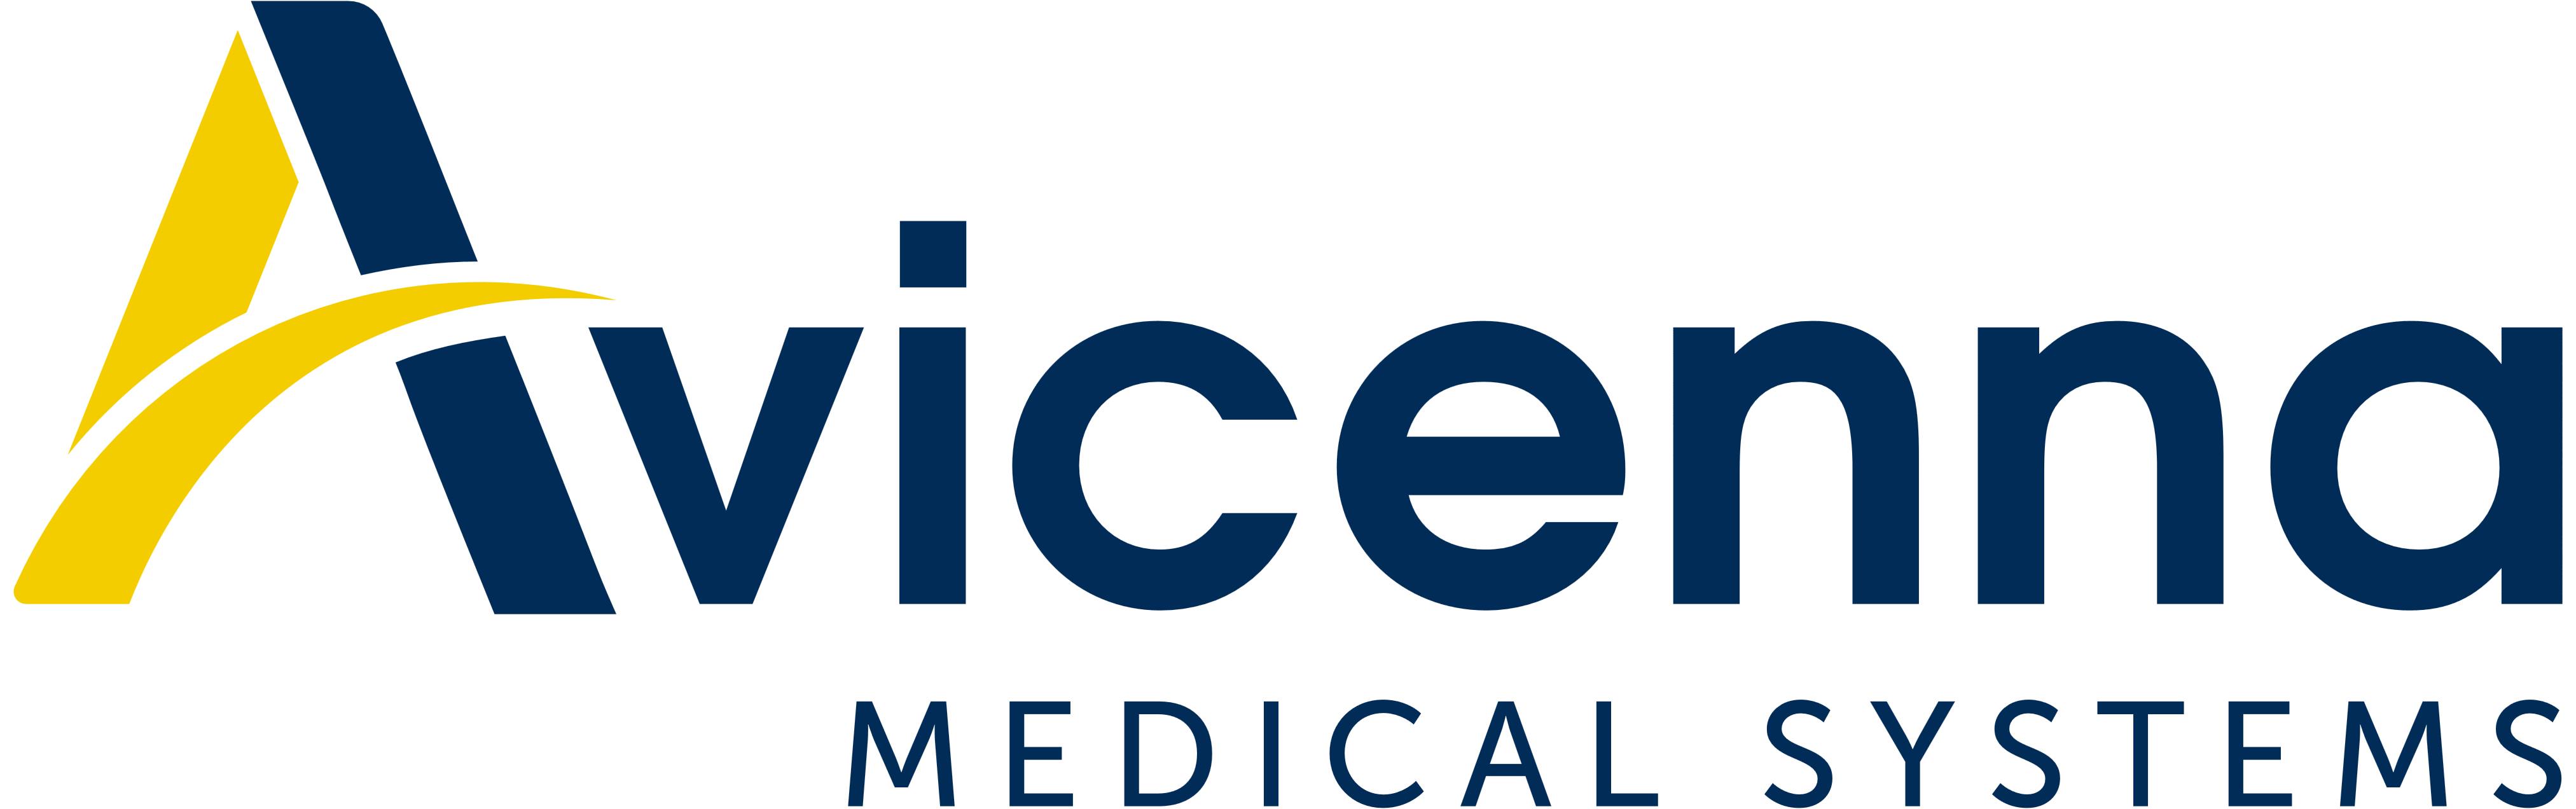 Avicenna Medical Systems logo, logotype